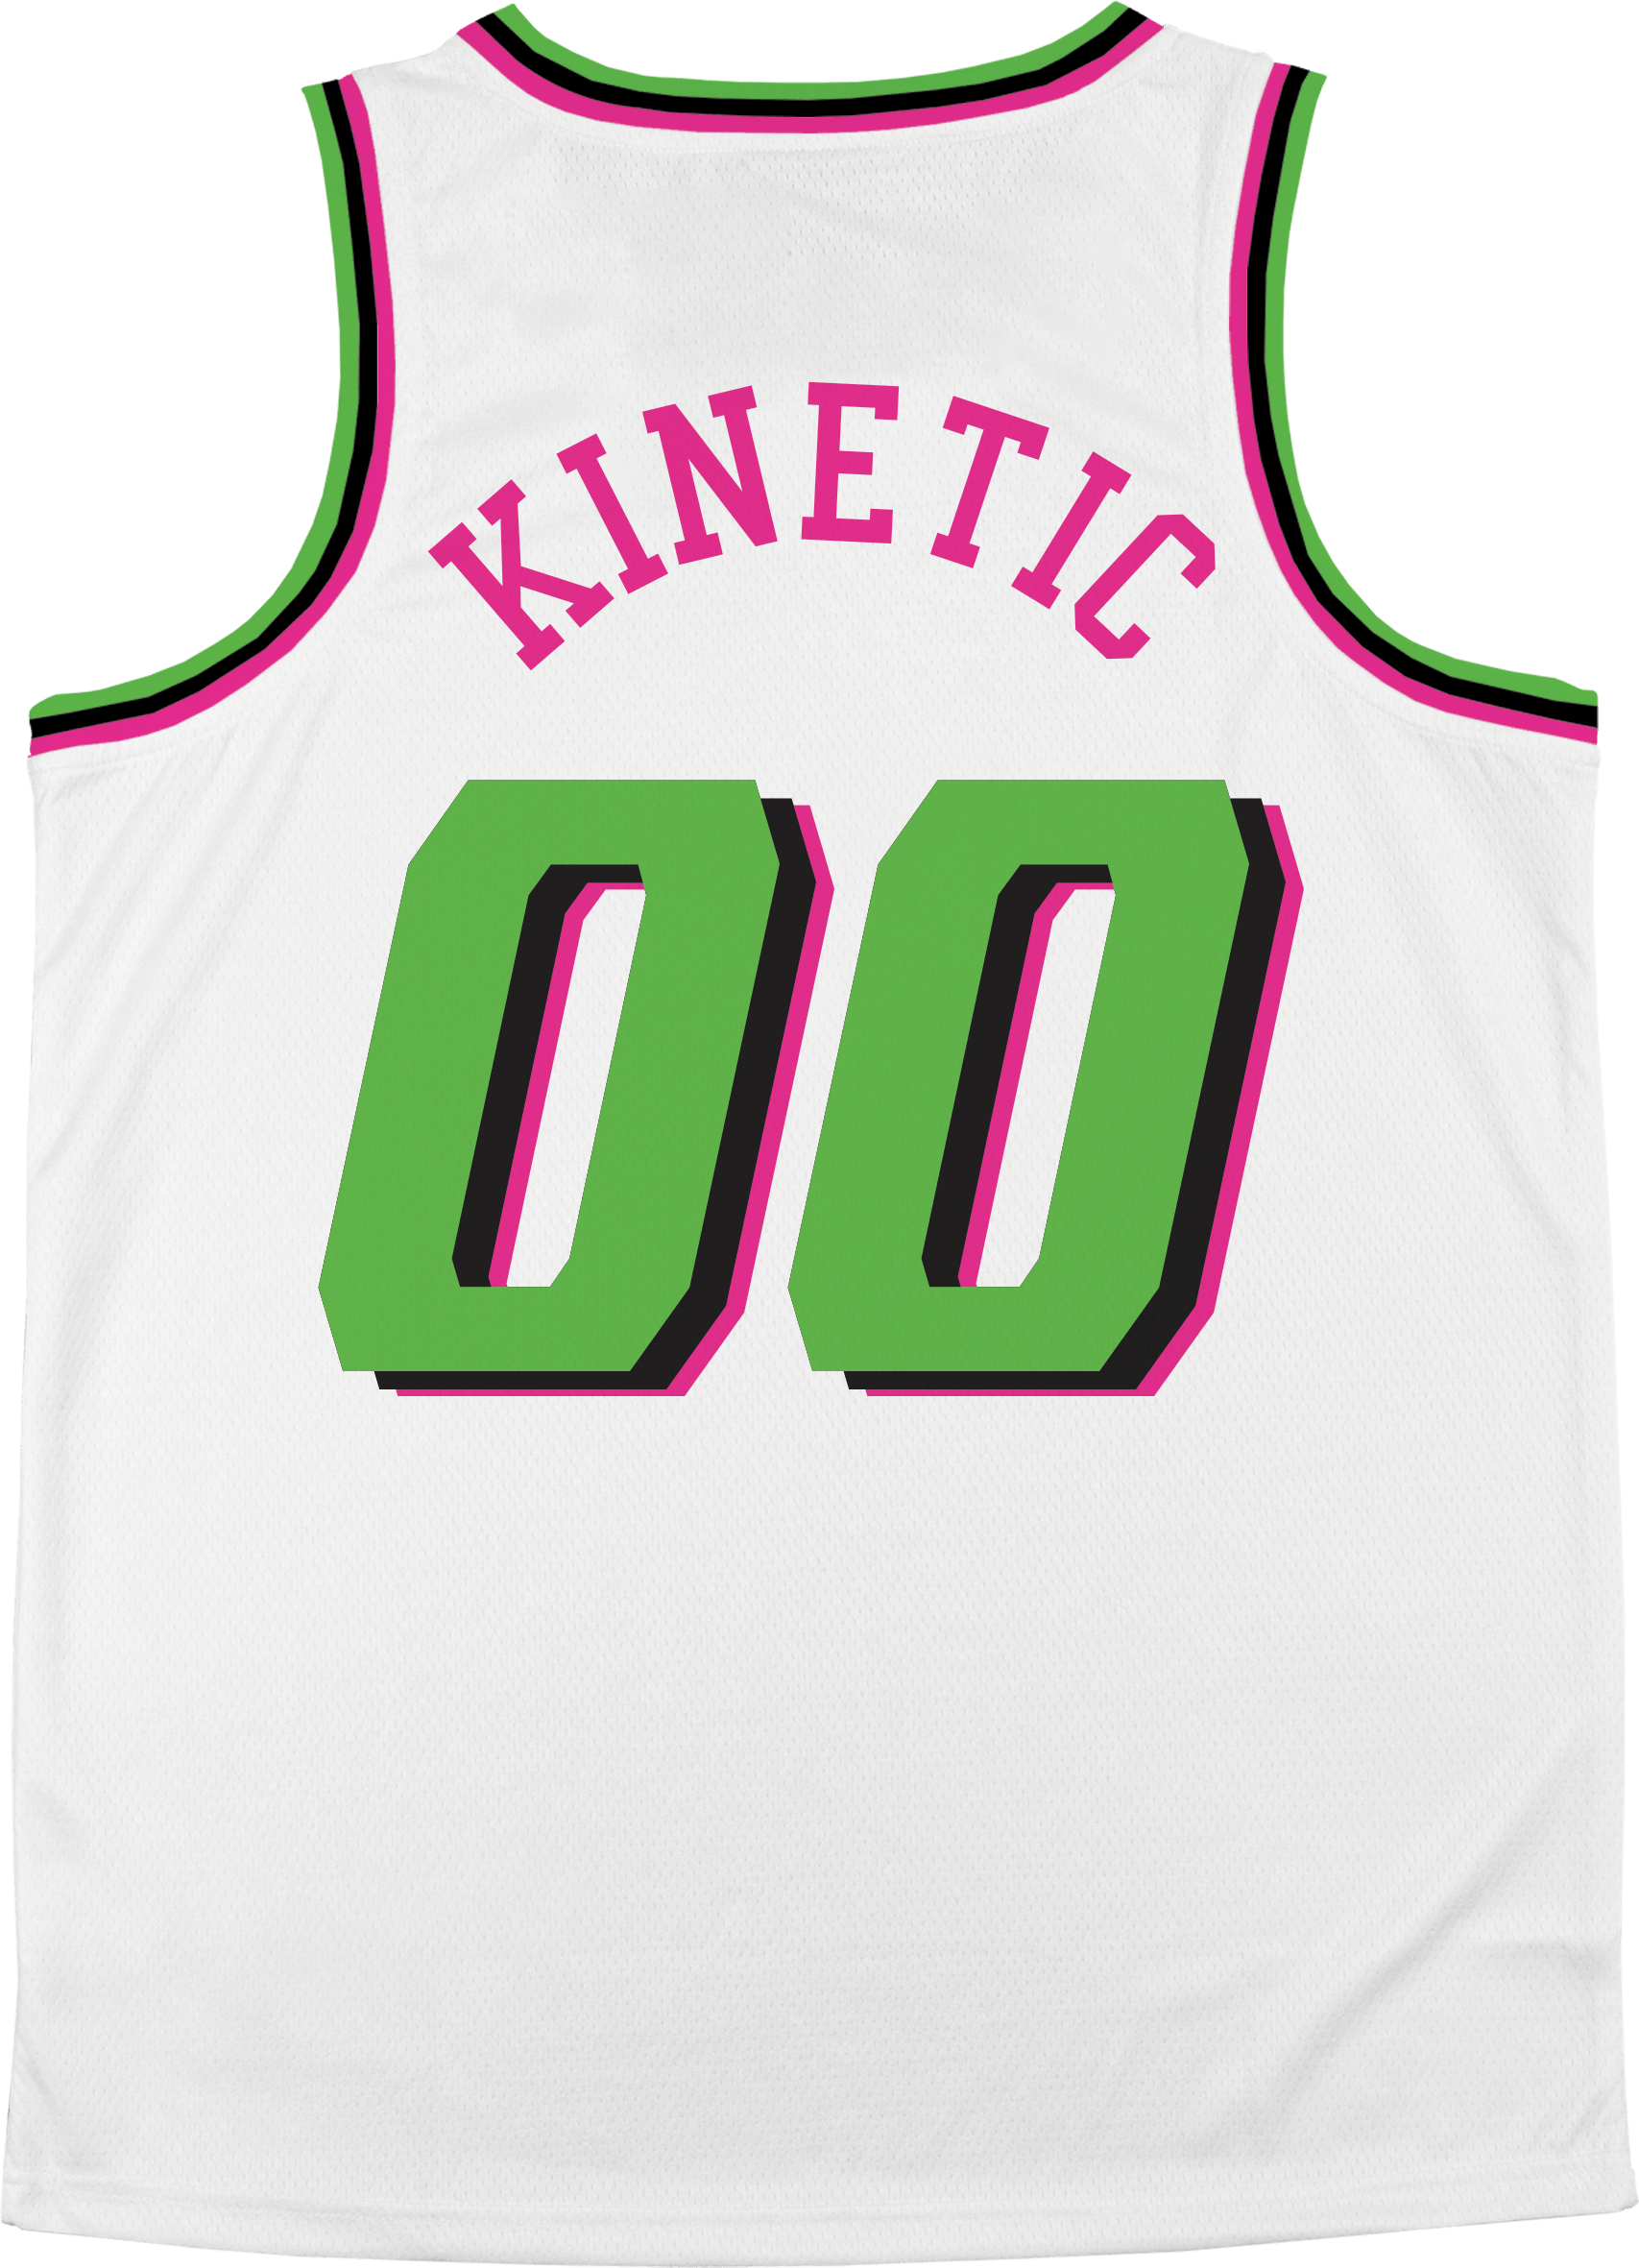 Delta Kappa Epsilon - Bubble Gum Basketball Jersey Premium Basketball Kinetic Society LLC 